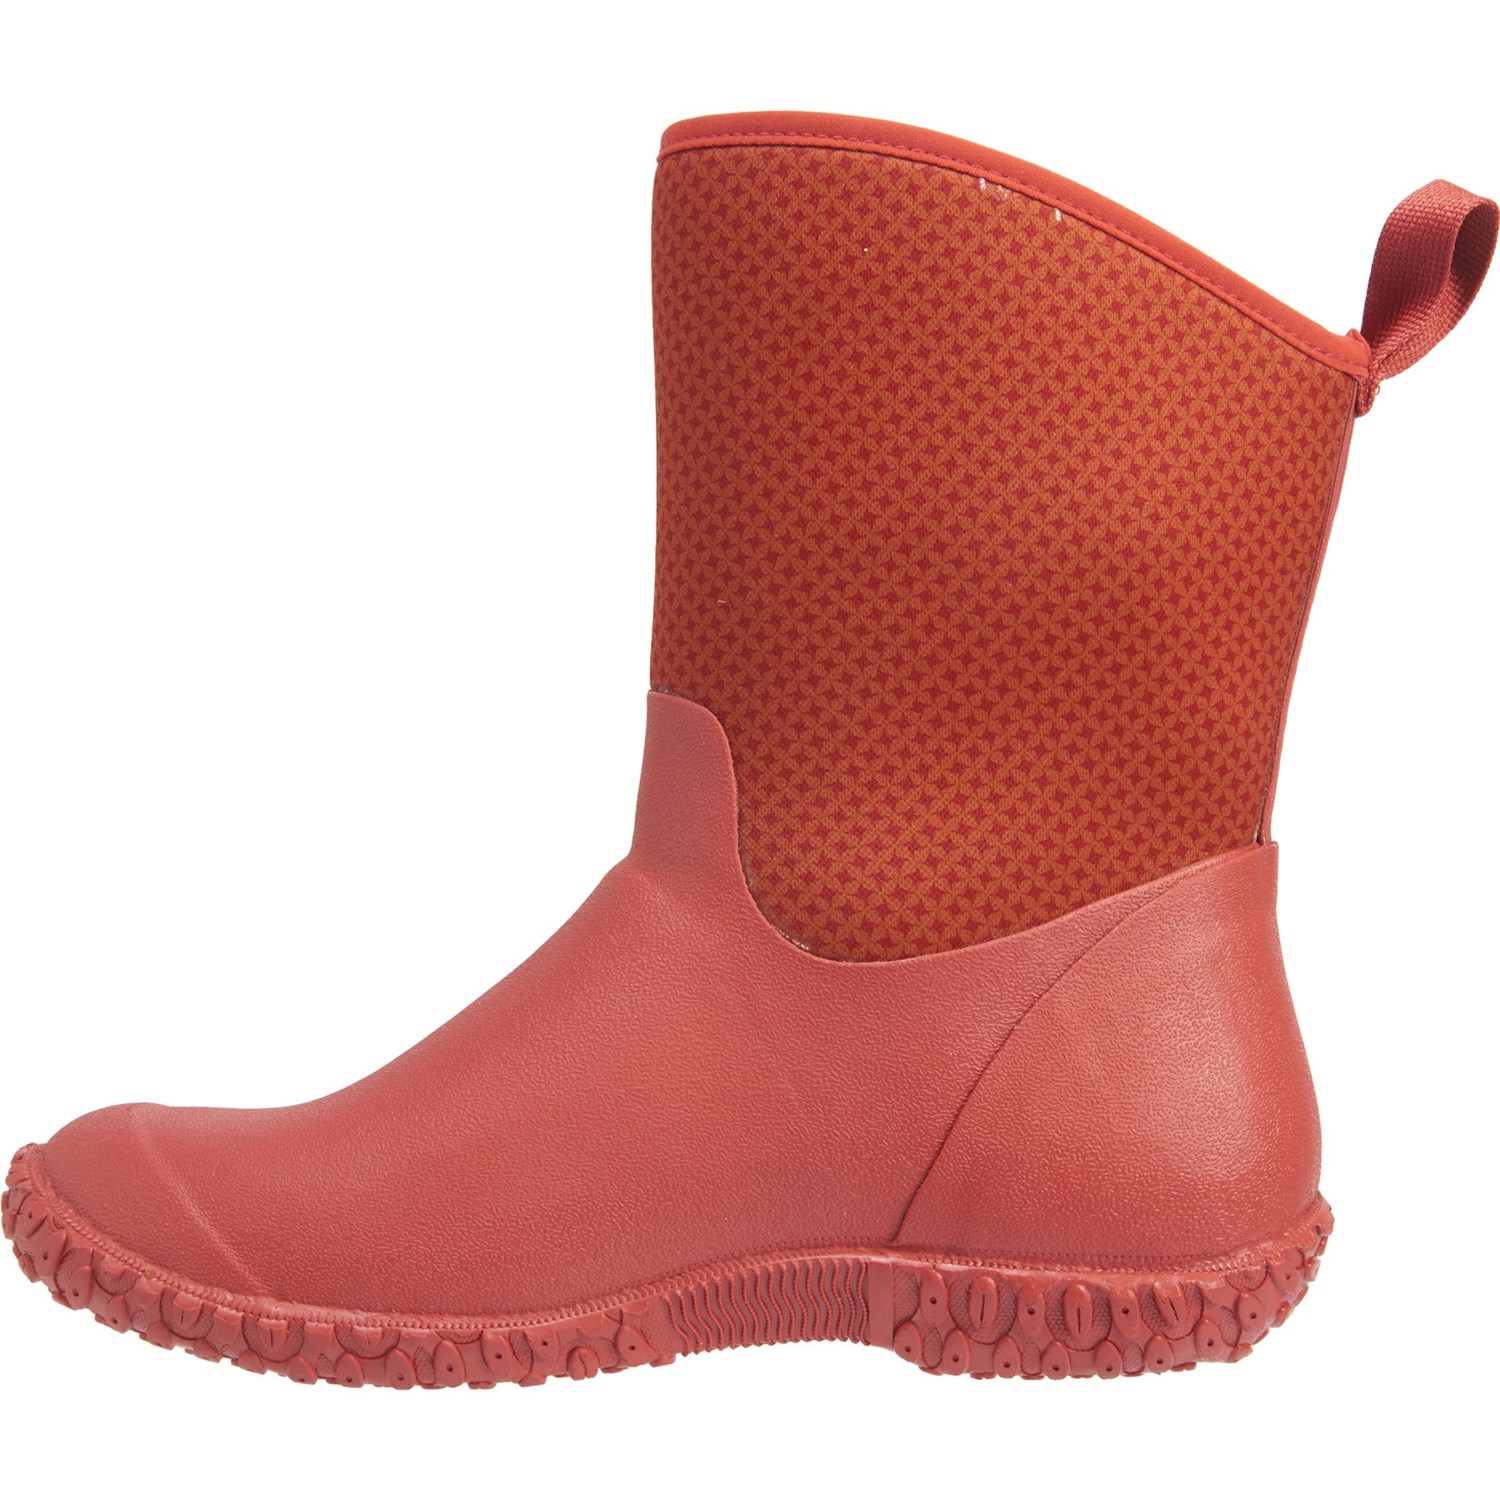 sierra trading post rain boots